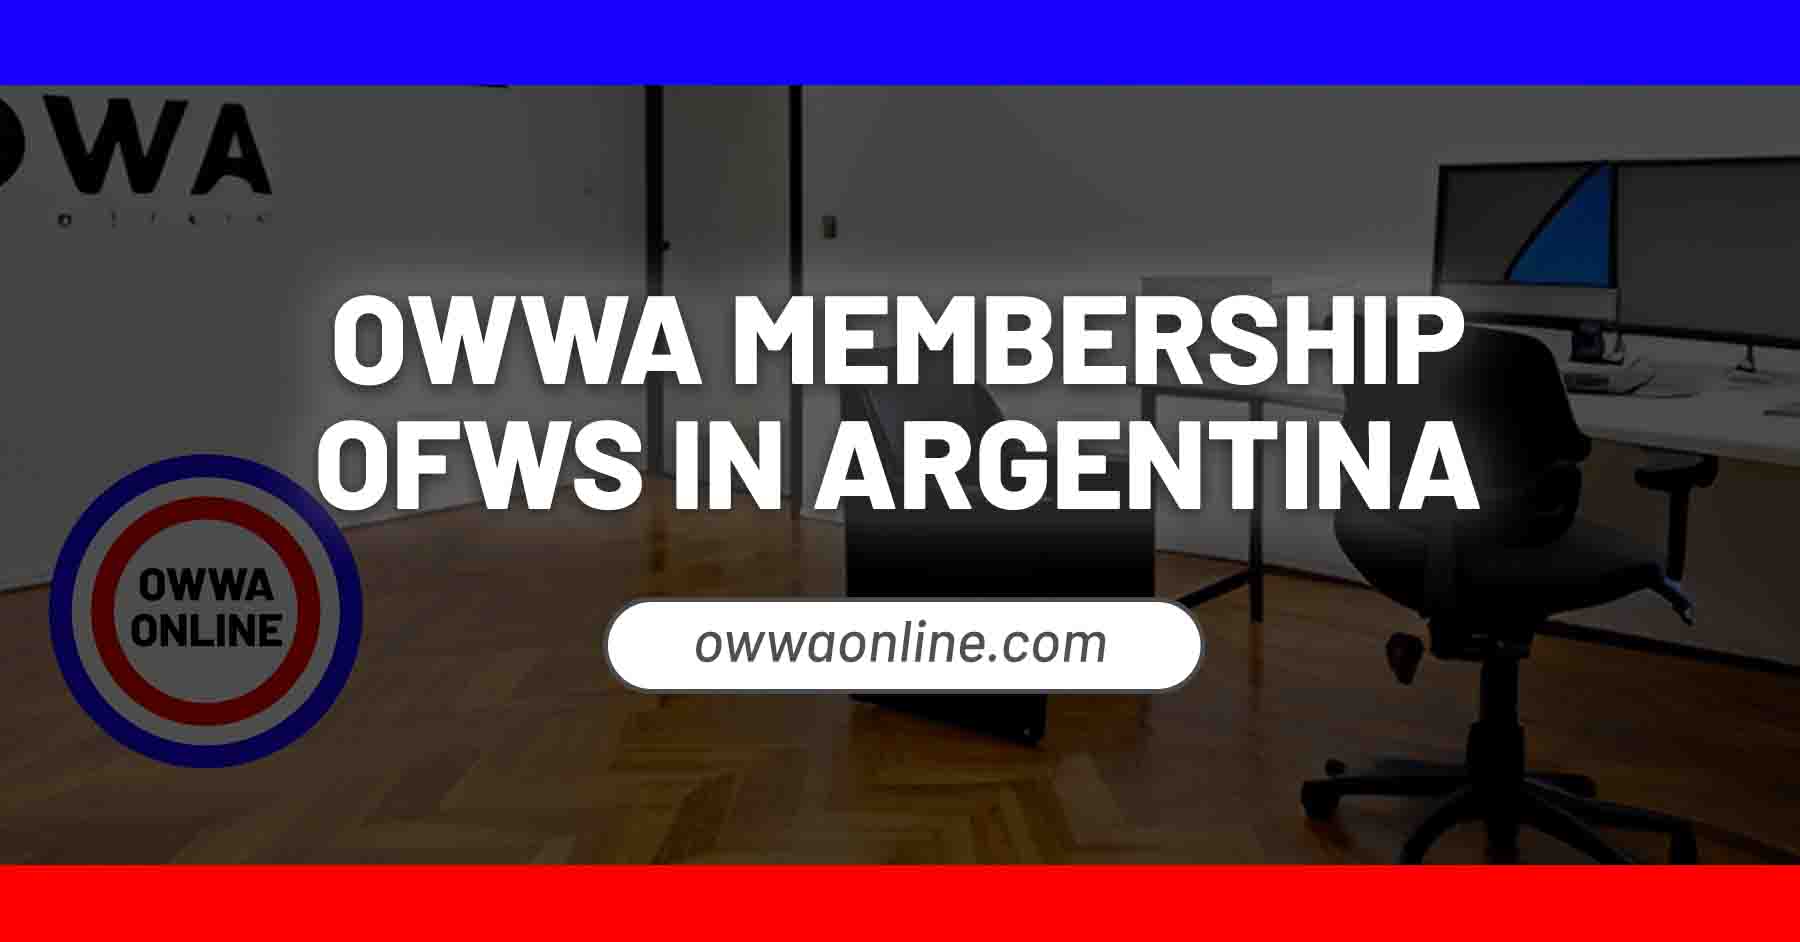 owwa membership application and renewal in Argentina